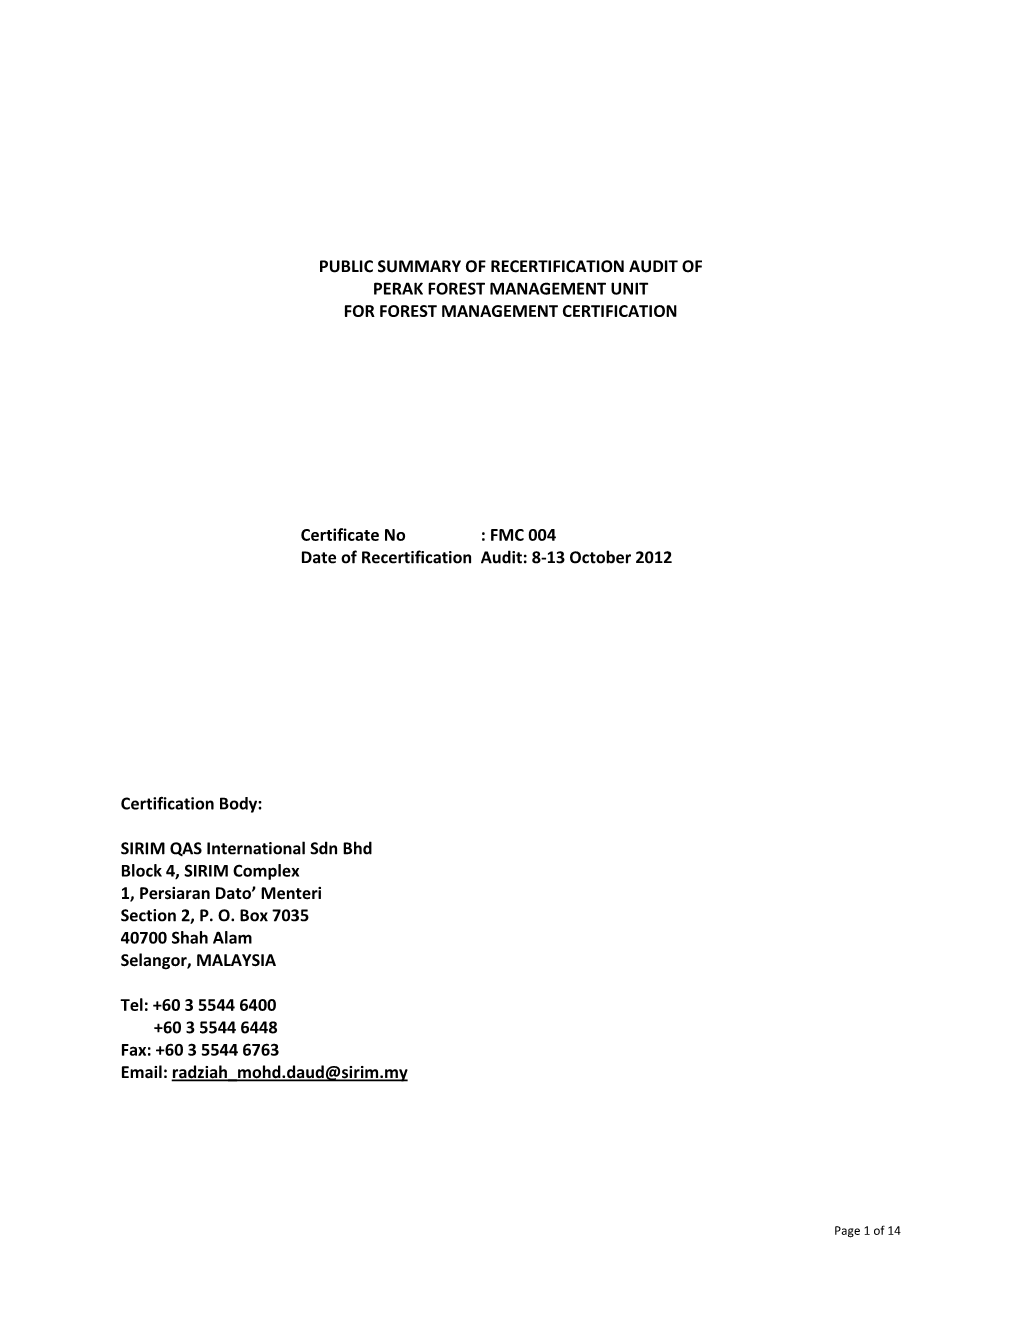 Public Summary of Recertification Audit of Perak Forest Management Unit for Forest Management Certification